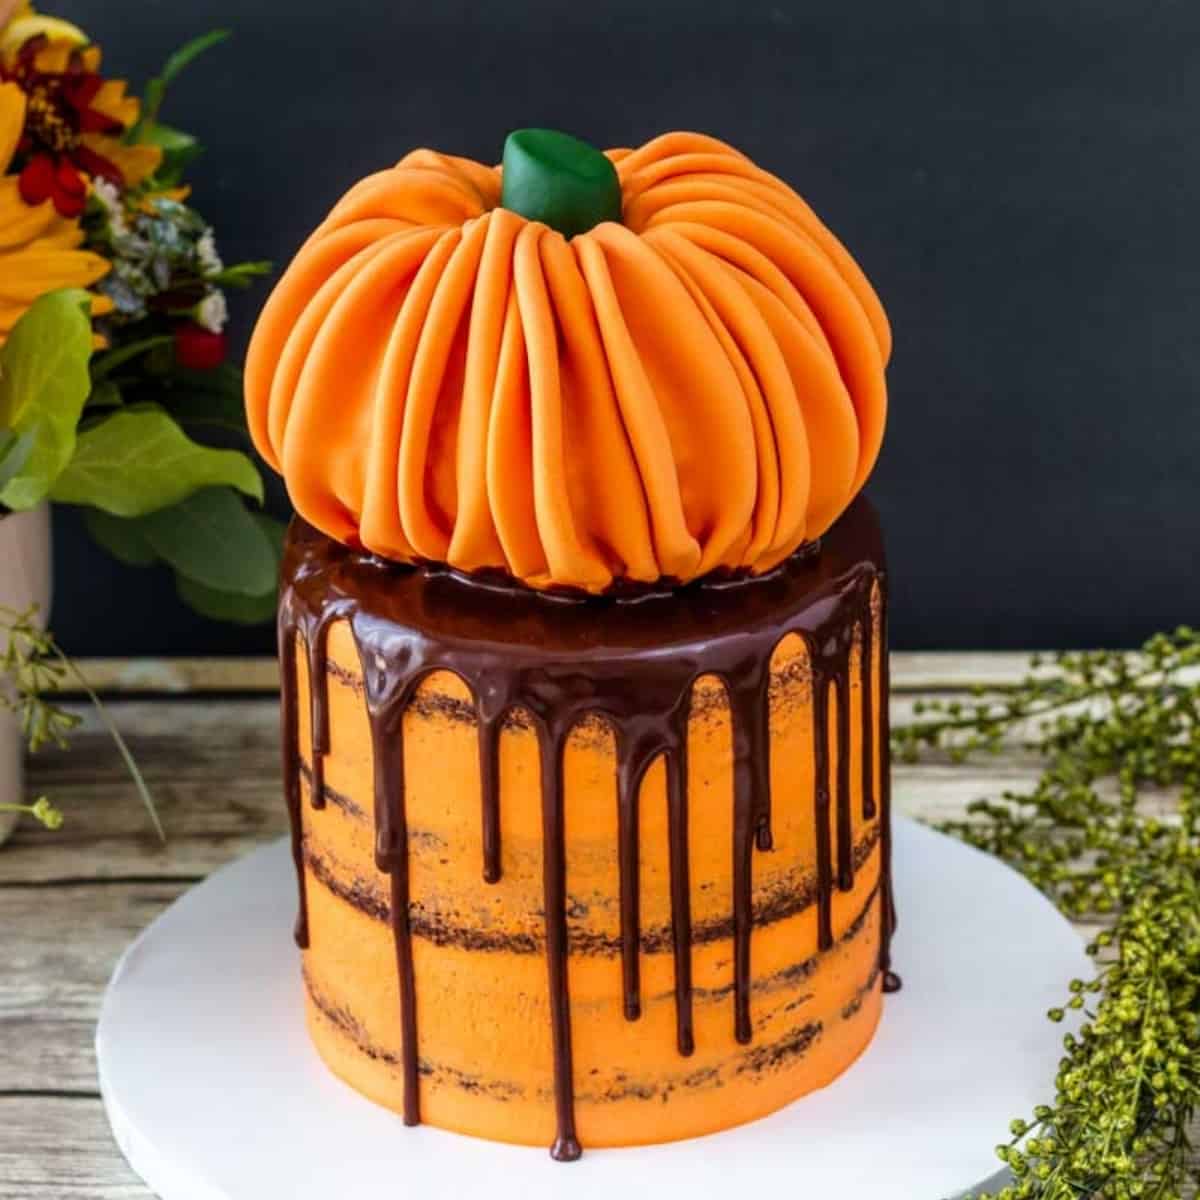 Best Pumpkin Cake Recipe - How To Make Pumpkin Cake